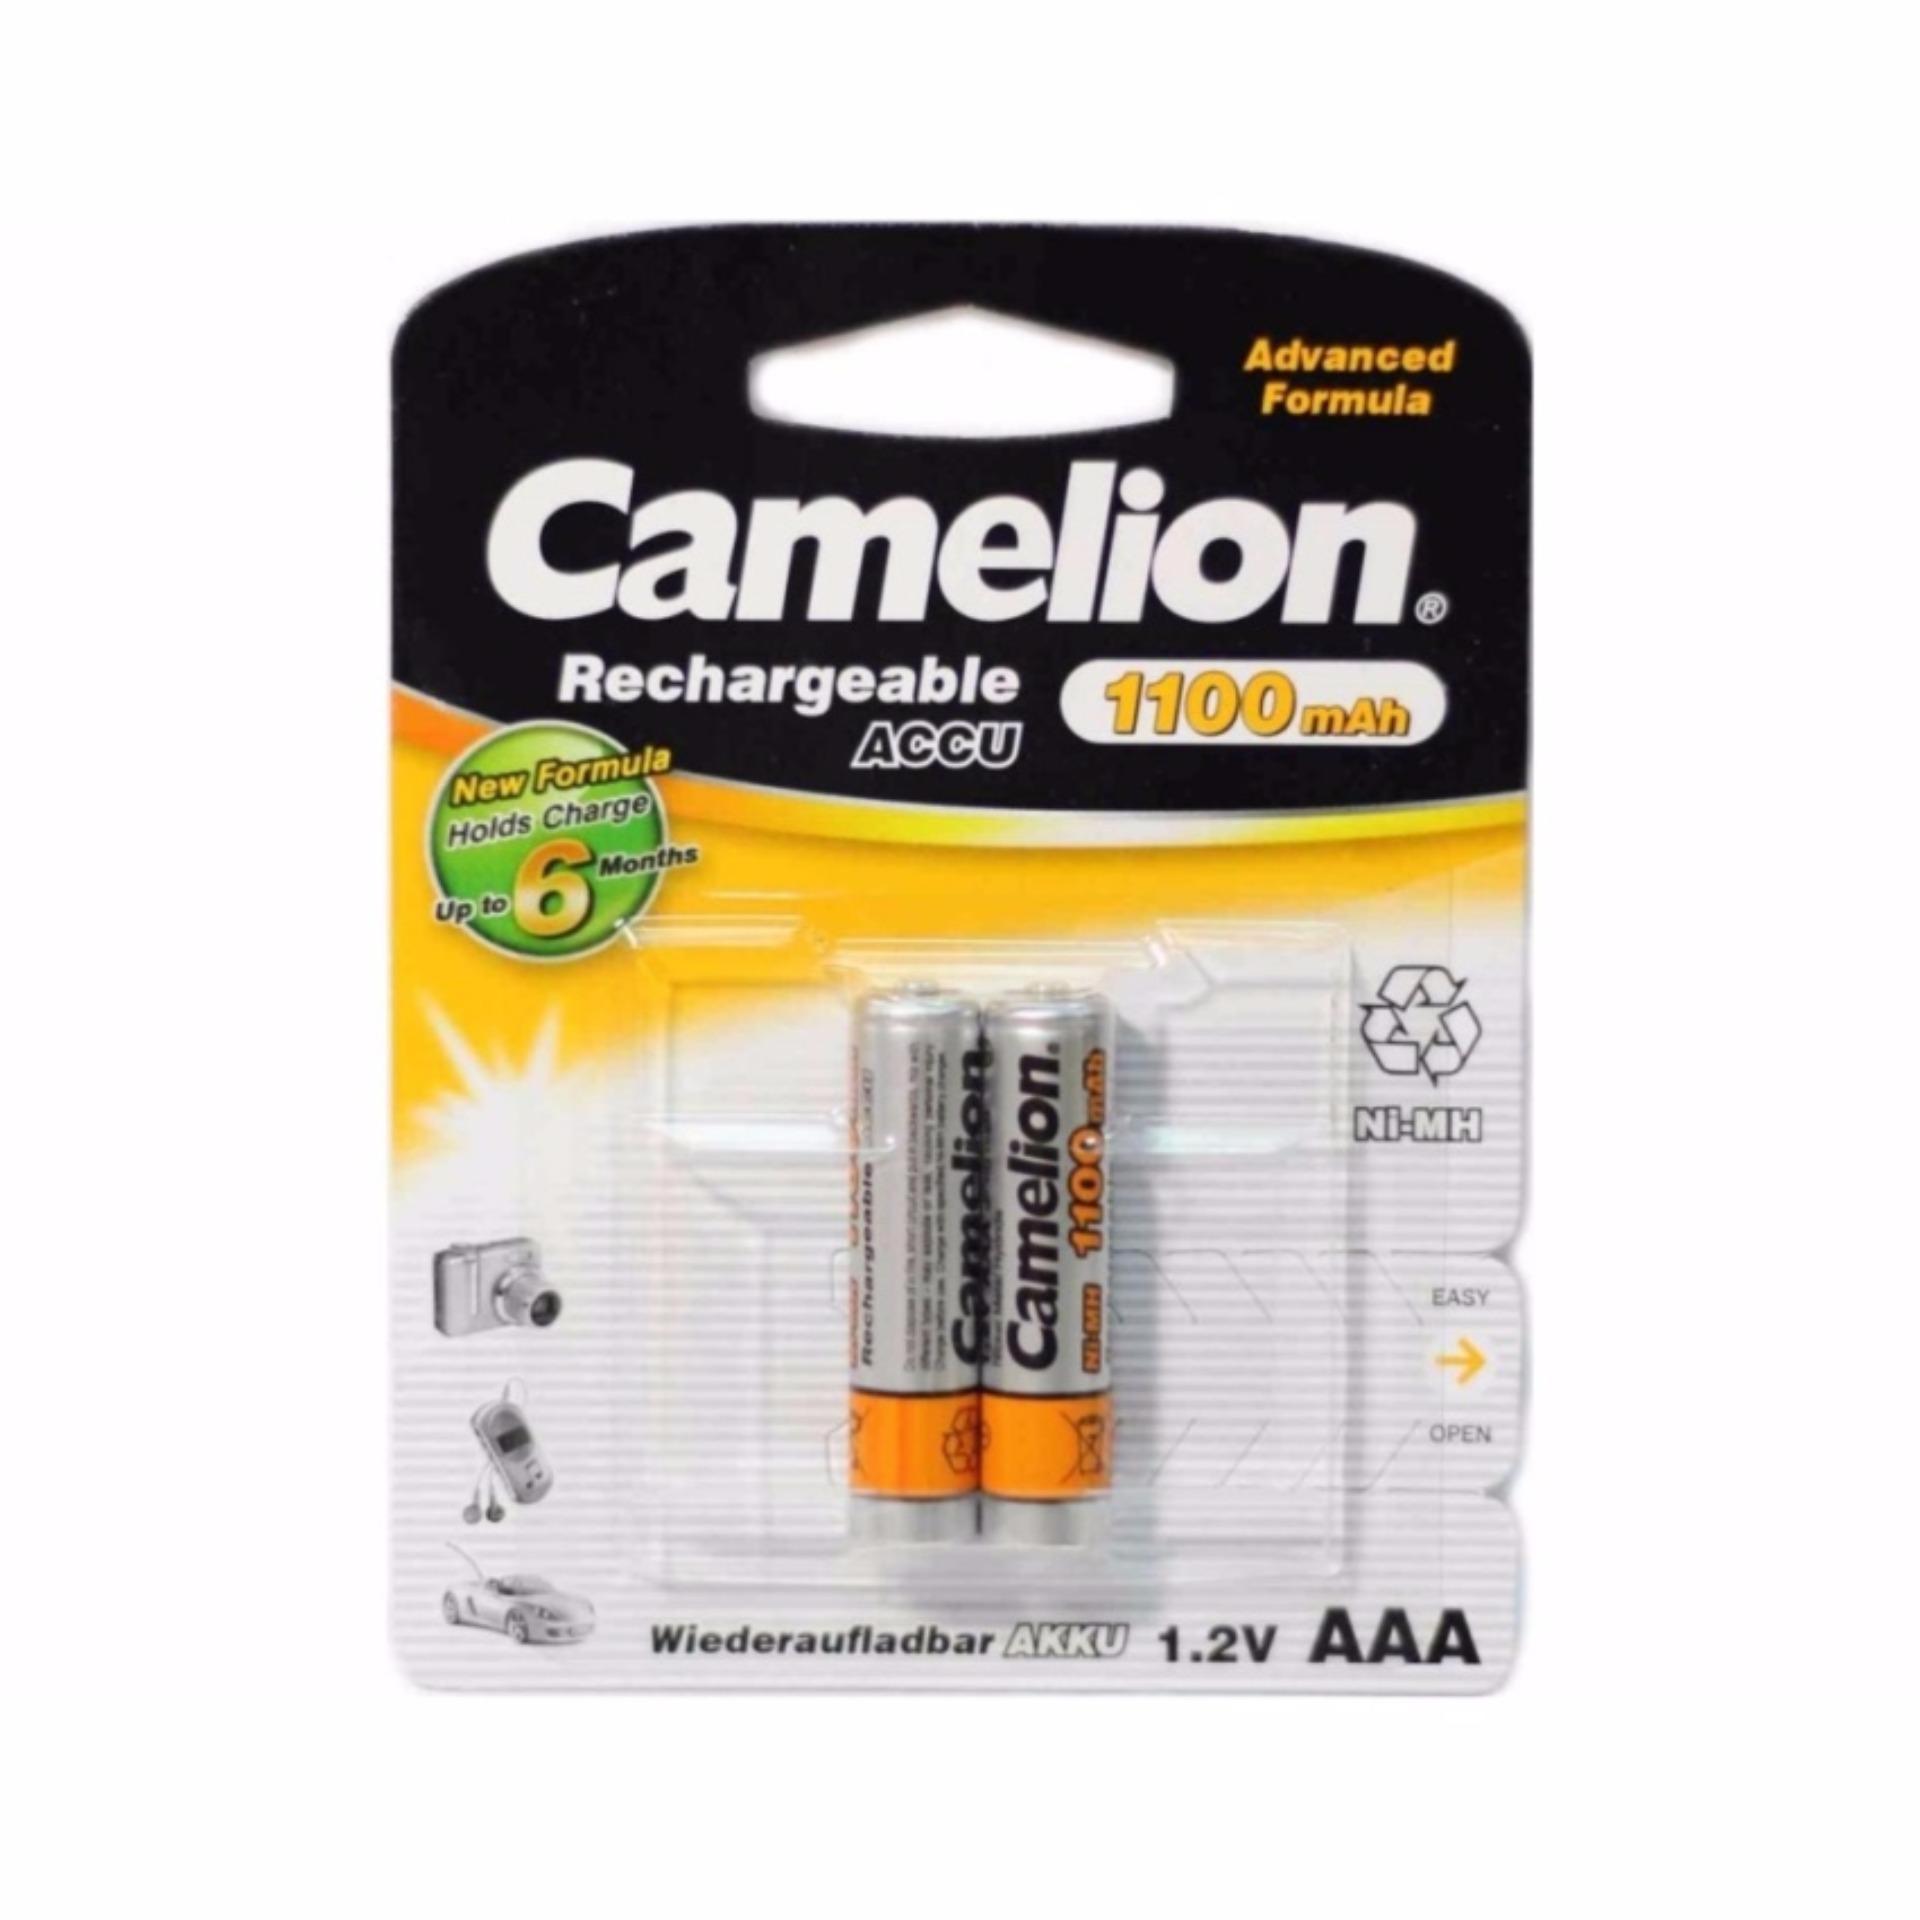 Bộ 2 pin sạc Camelion AAA 1100mAh